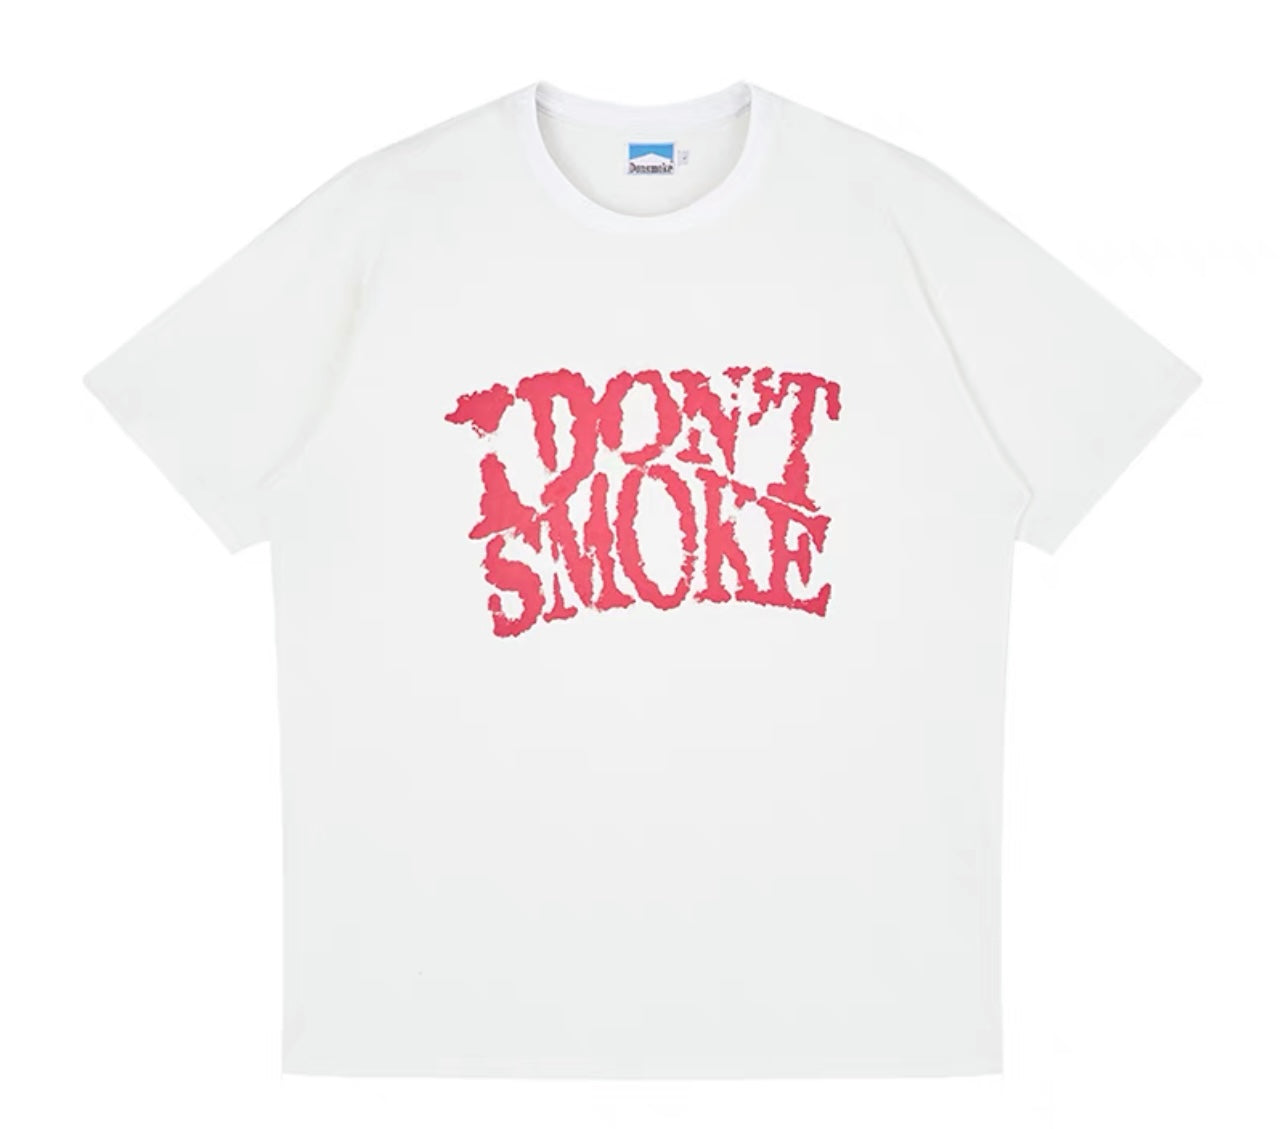 I don’t Smoke (PinkWords)